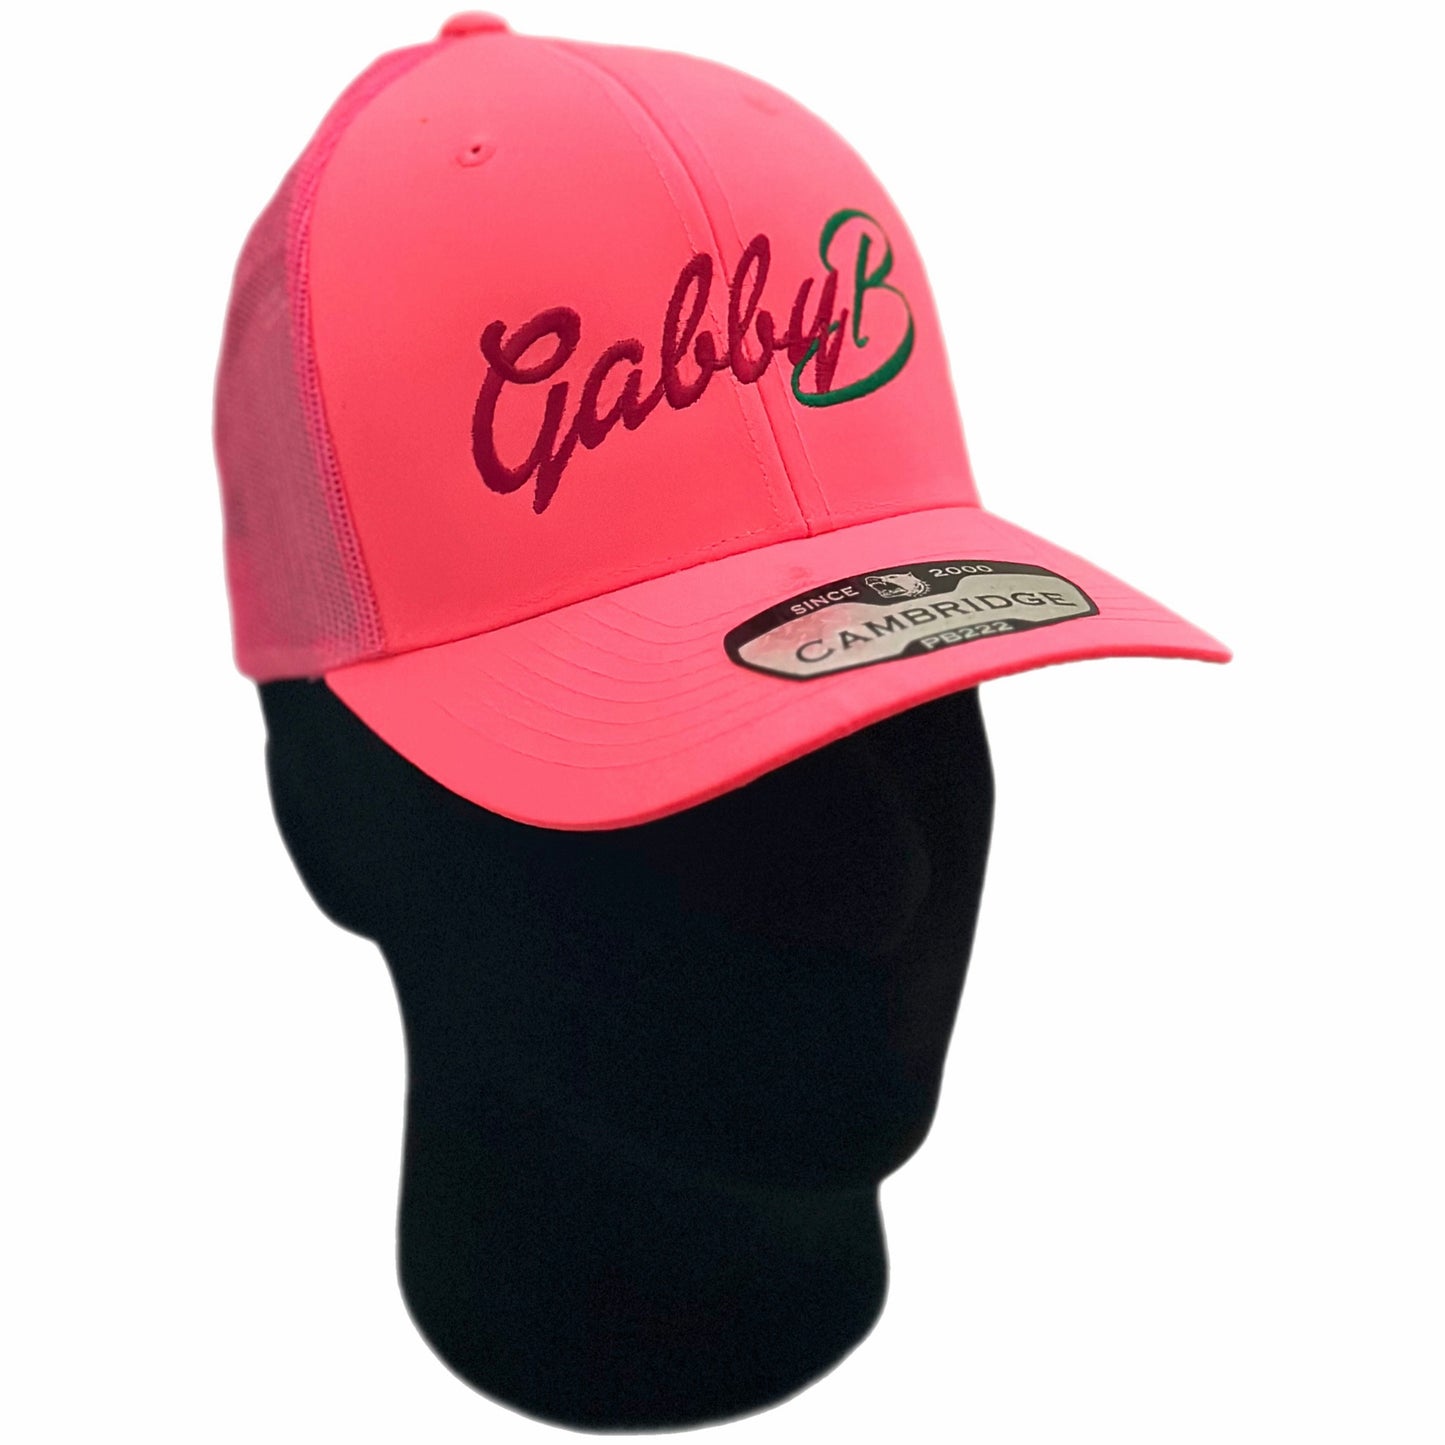 Pink Snap Back "Gabby B" Hat.